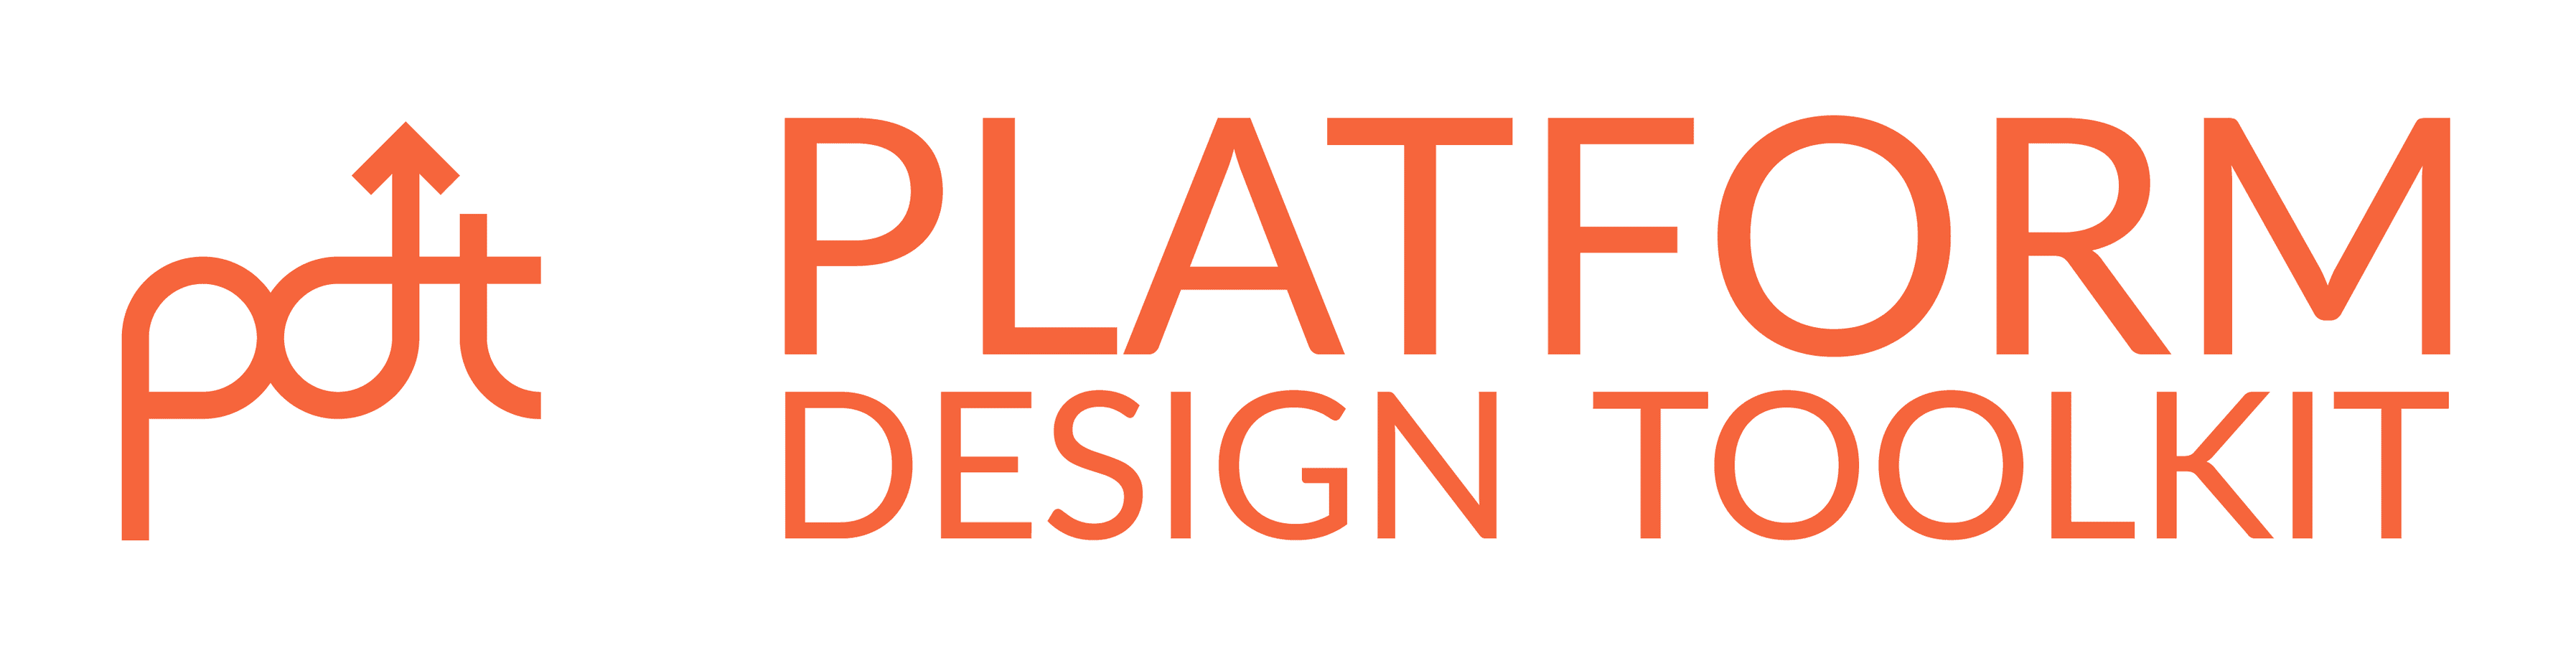 Platform Design Toolkit